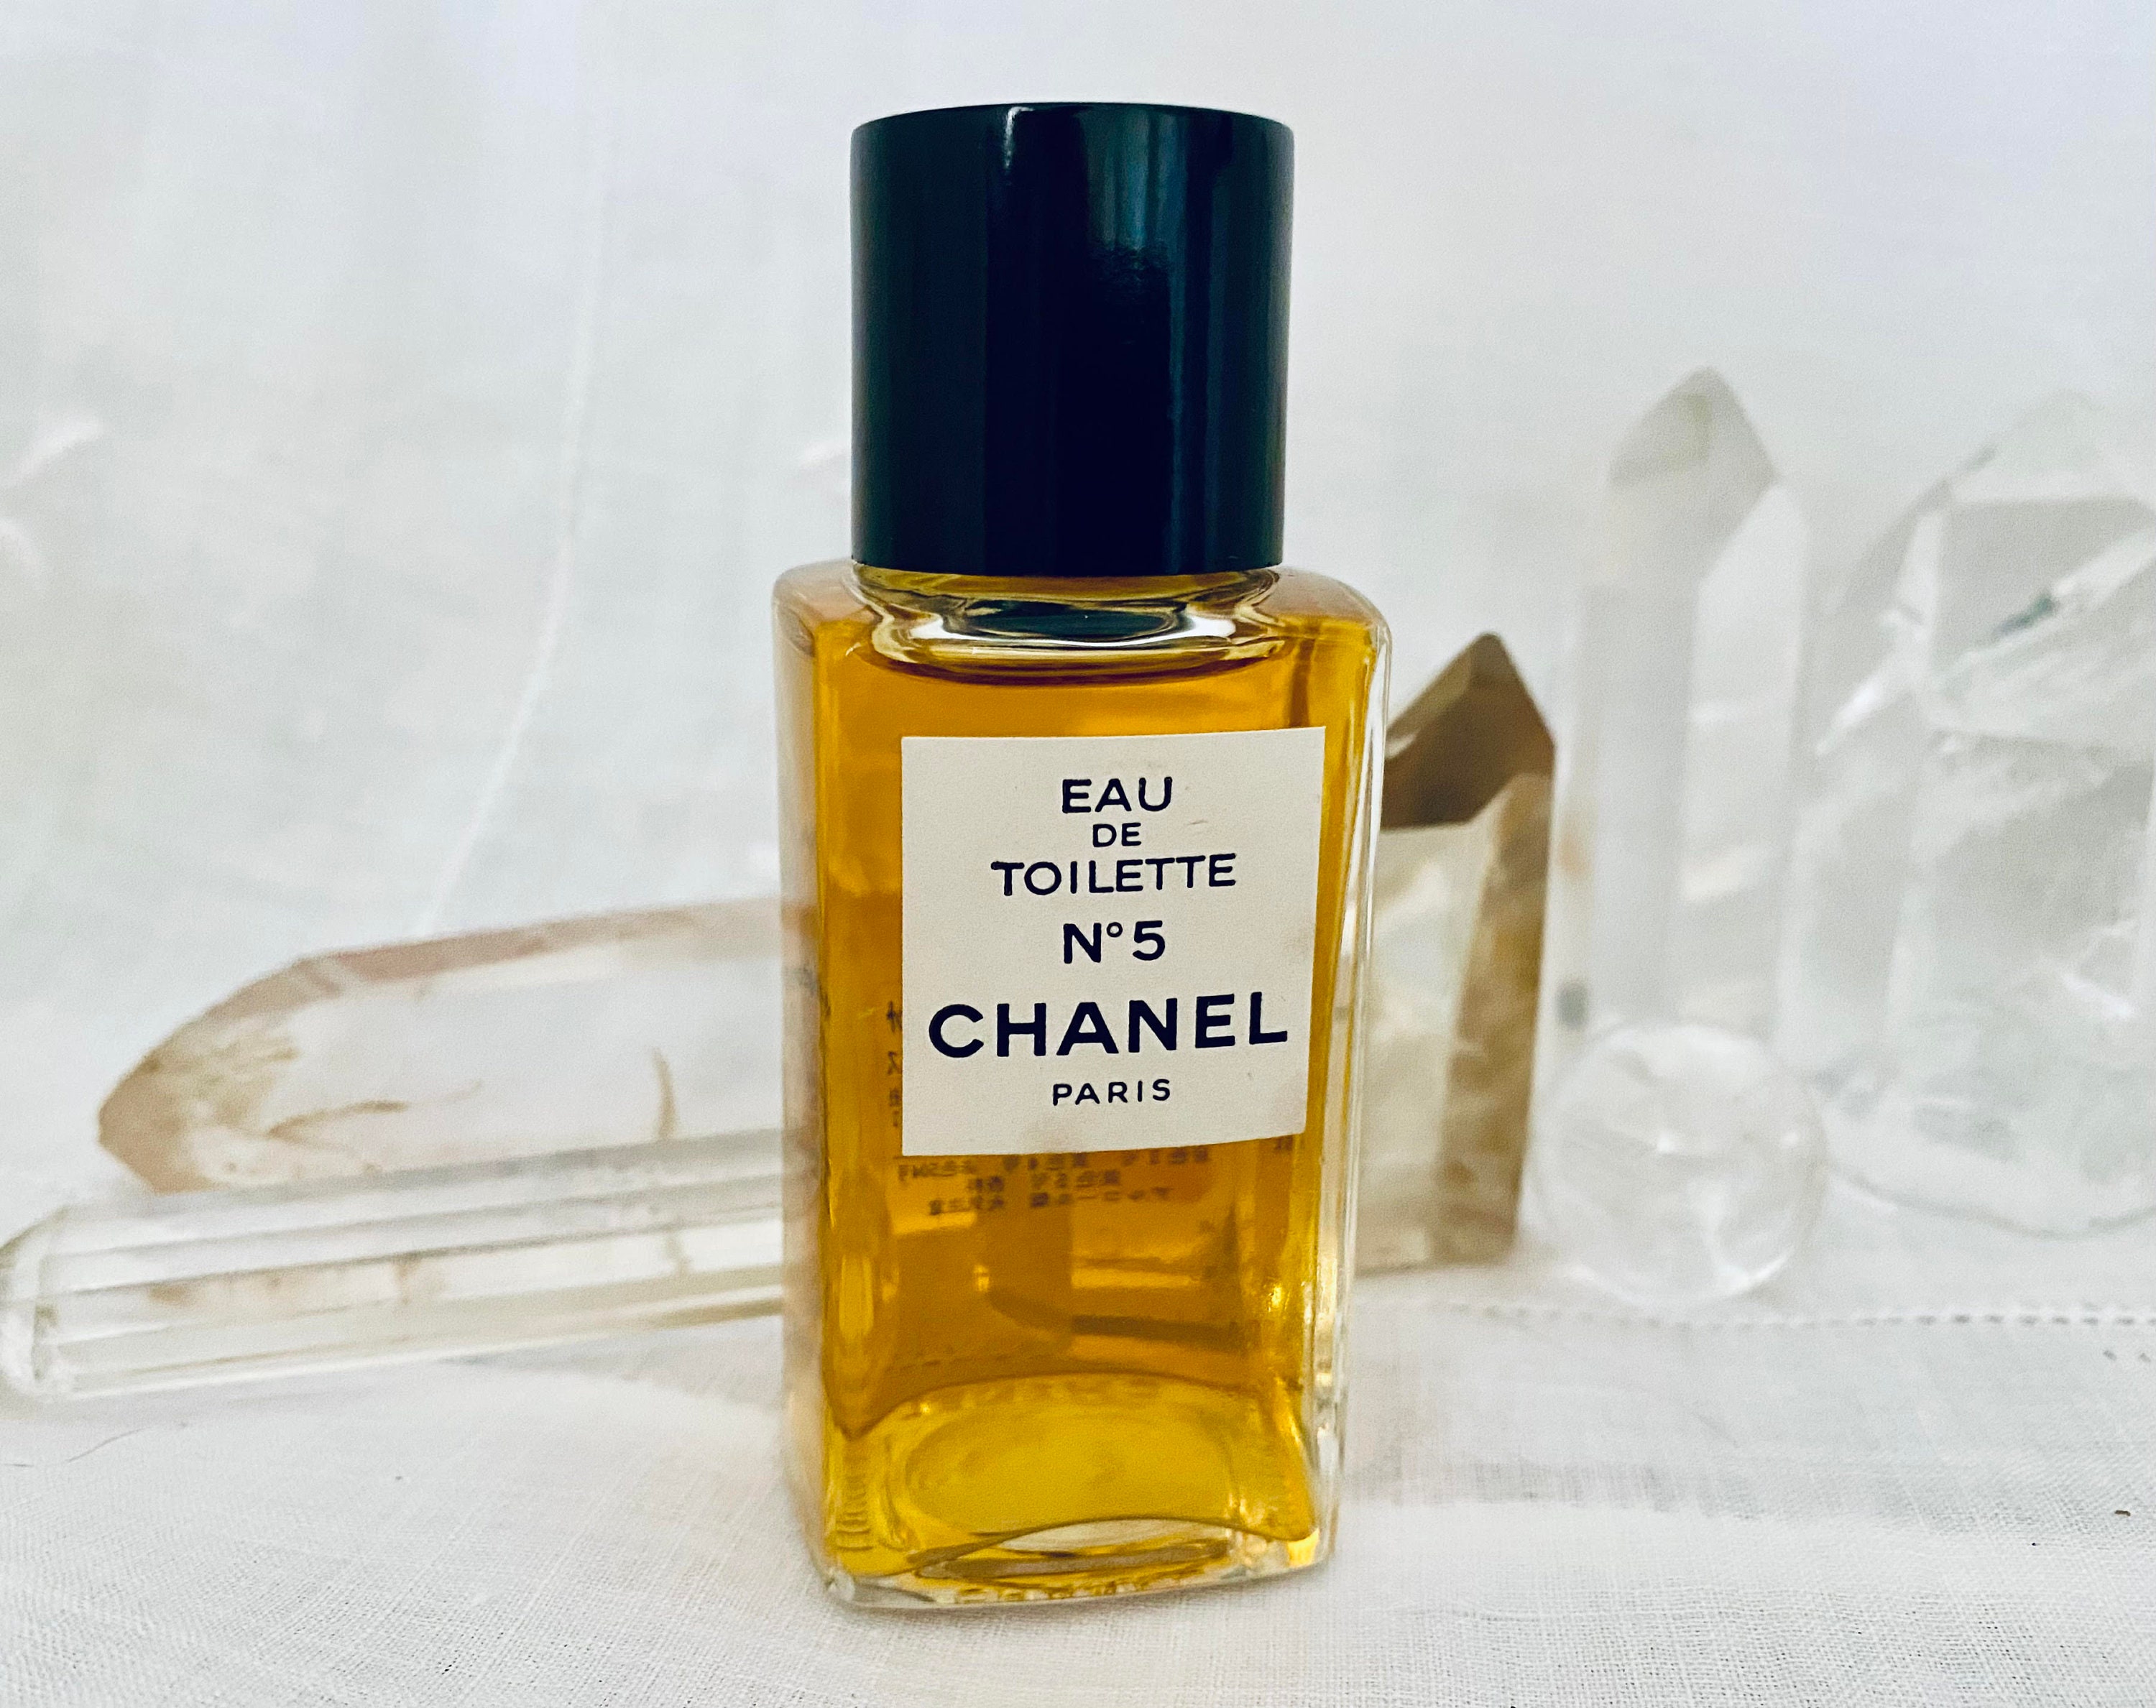 Chanel No. 19 118 Ml. or 4oz. Flacon Eau De Toilette 1970 